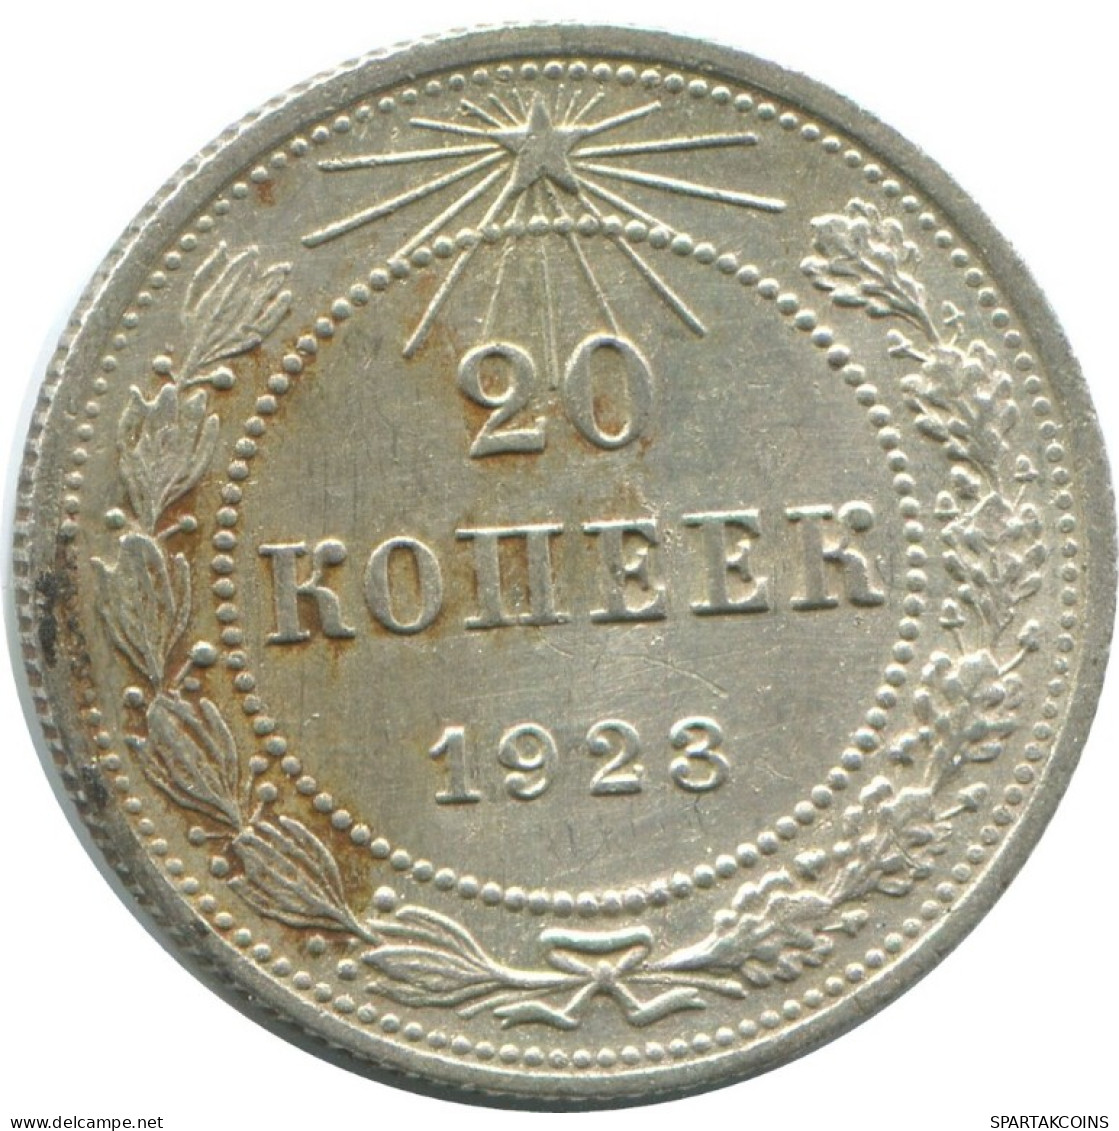 20 KOPEKS 1923 RUSSIA RSFSR SILVER Coin HIGH GRADE #AF694.U.A - Russia